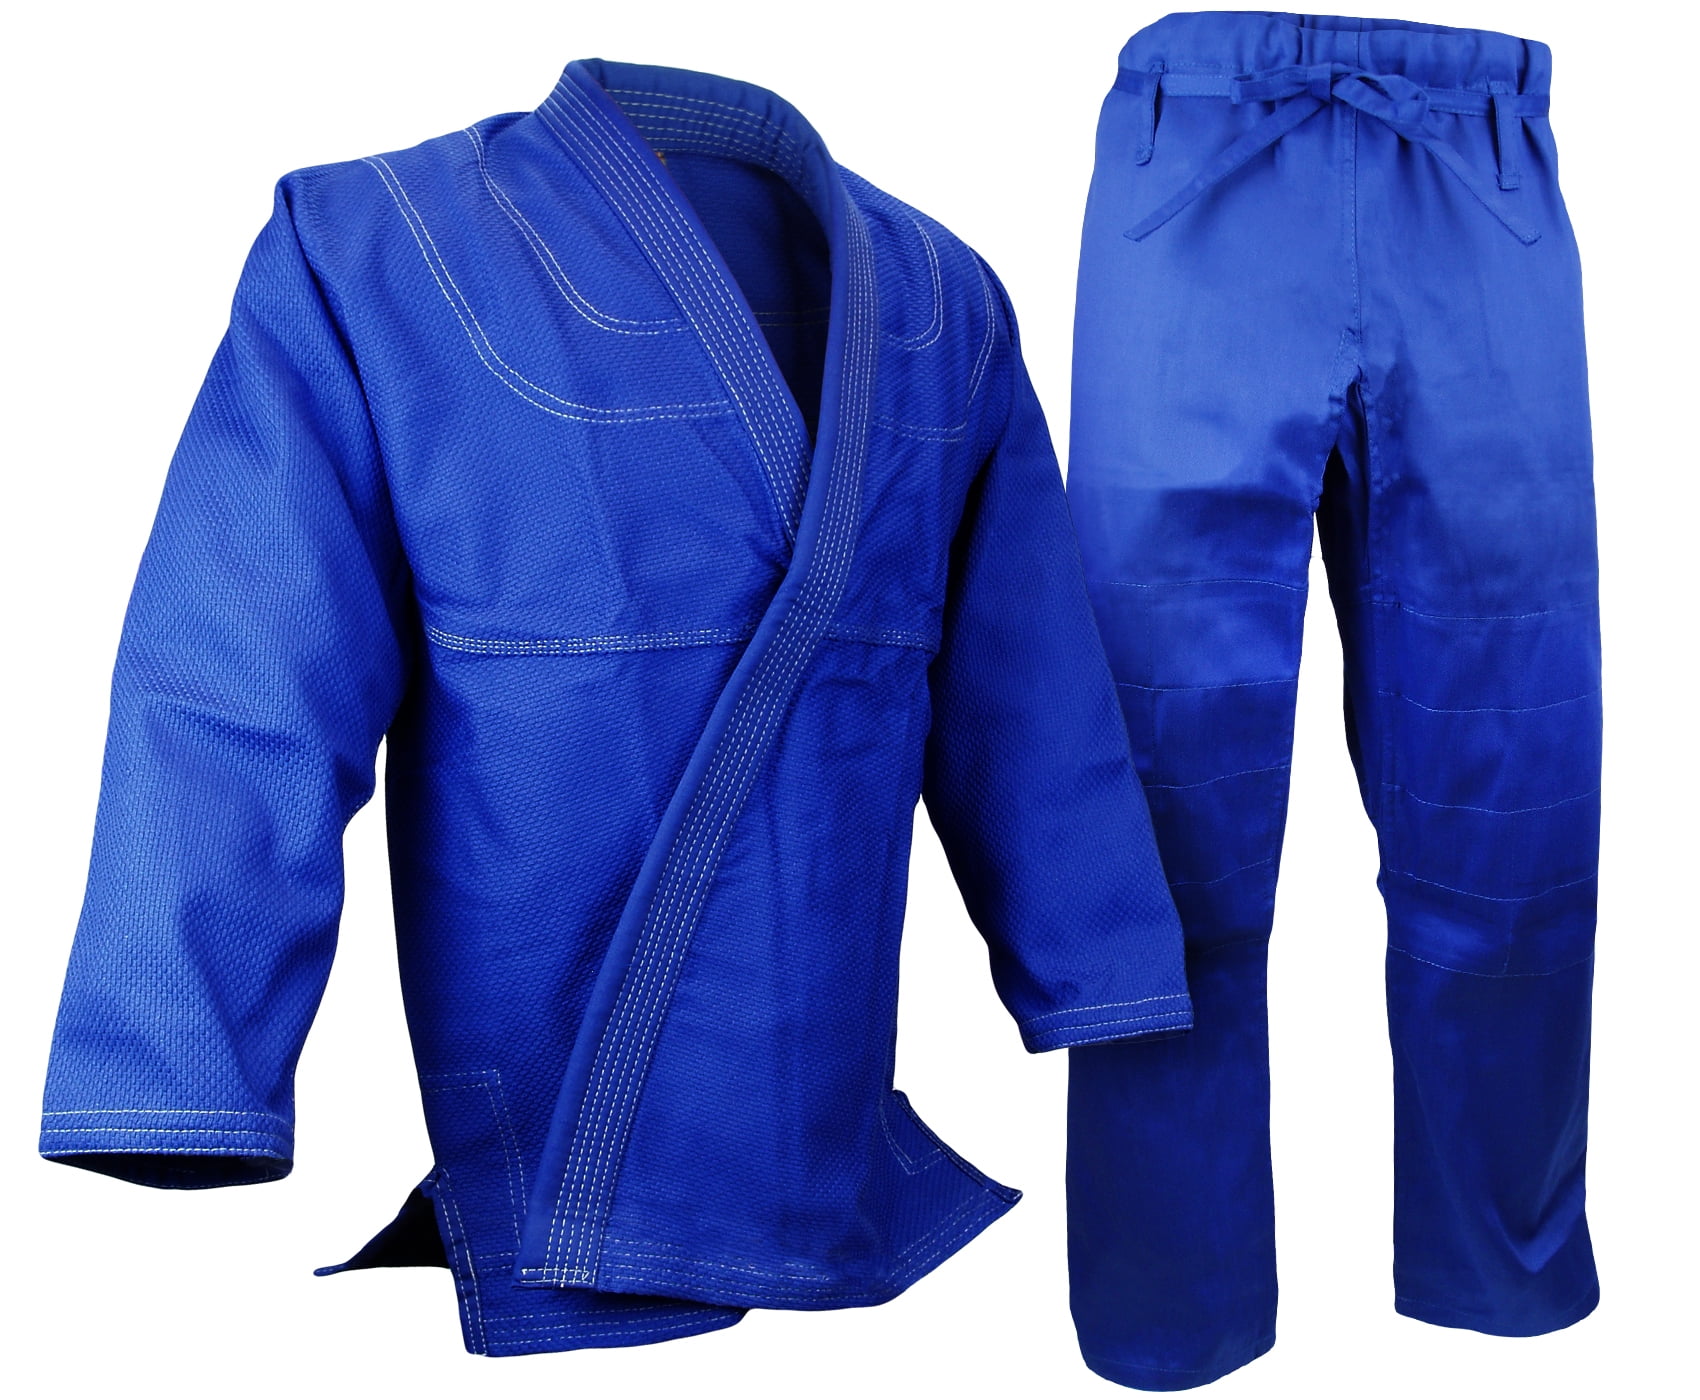 Jiu Jitsu  Uniform Blue/White/Black set 100% cotton Preshrunk BJJ Gi Kimono 